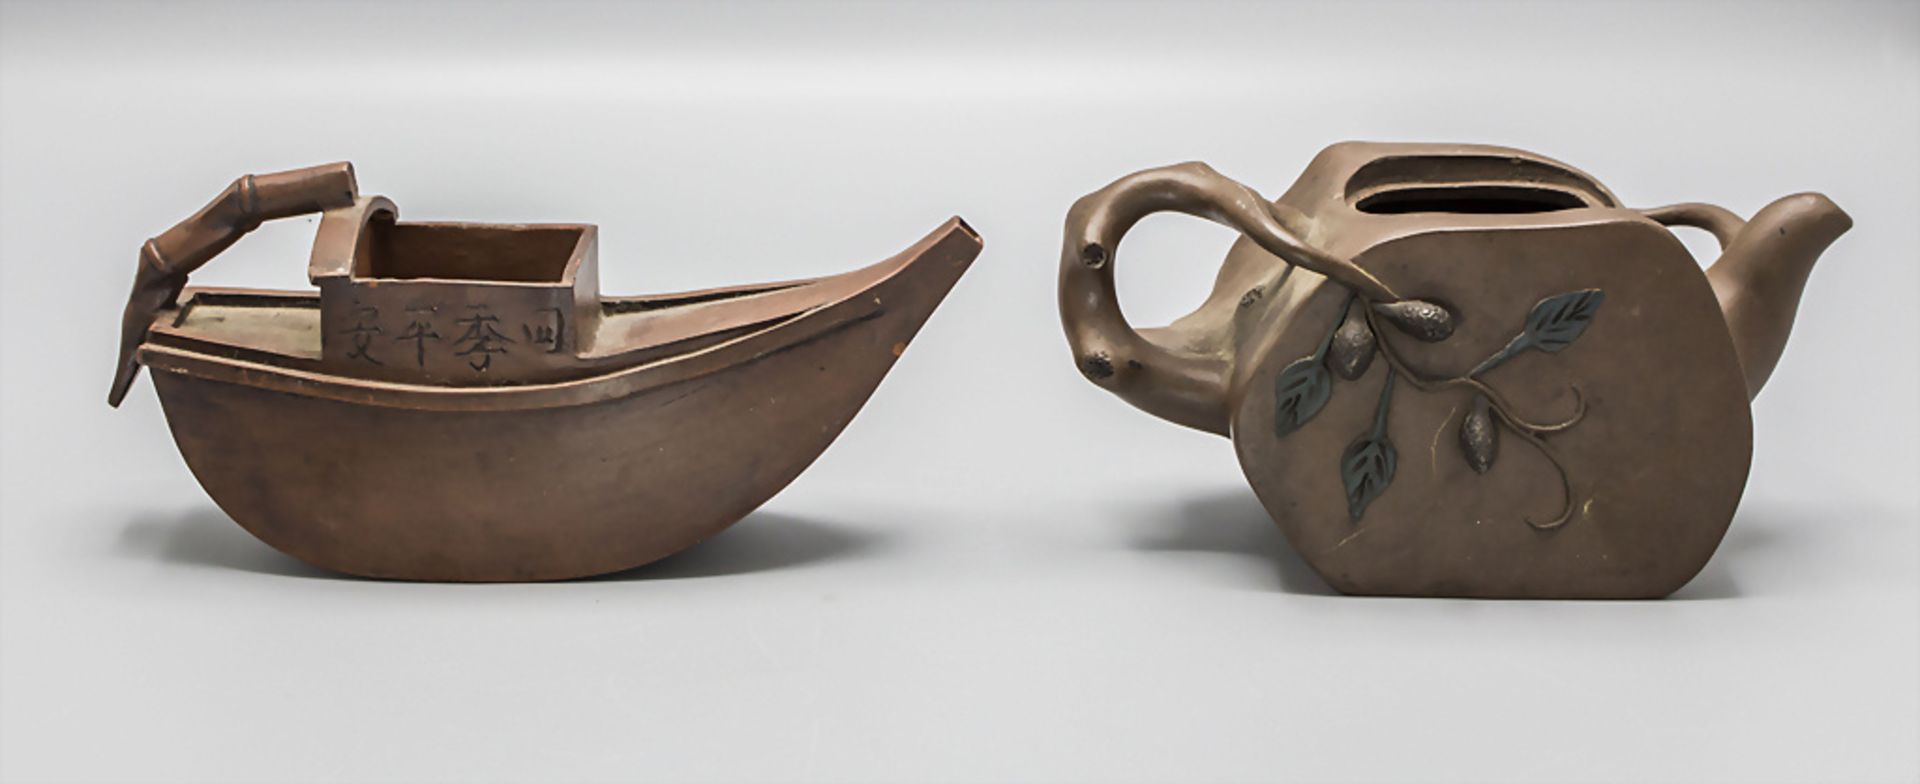 Zwei Teekännchen / Two ceramic teapots, China, 20. Jh. - Bild 3 aus 10